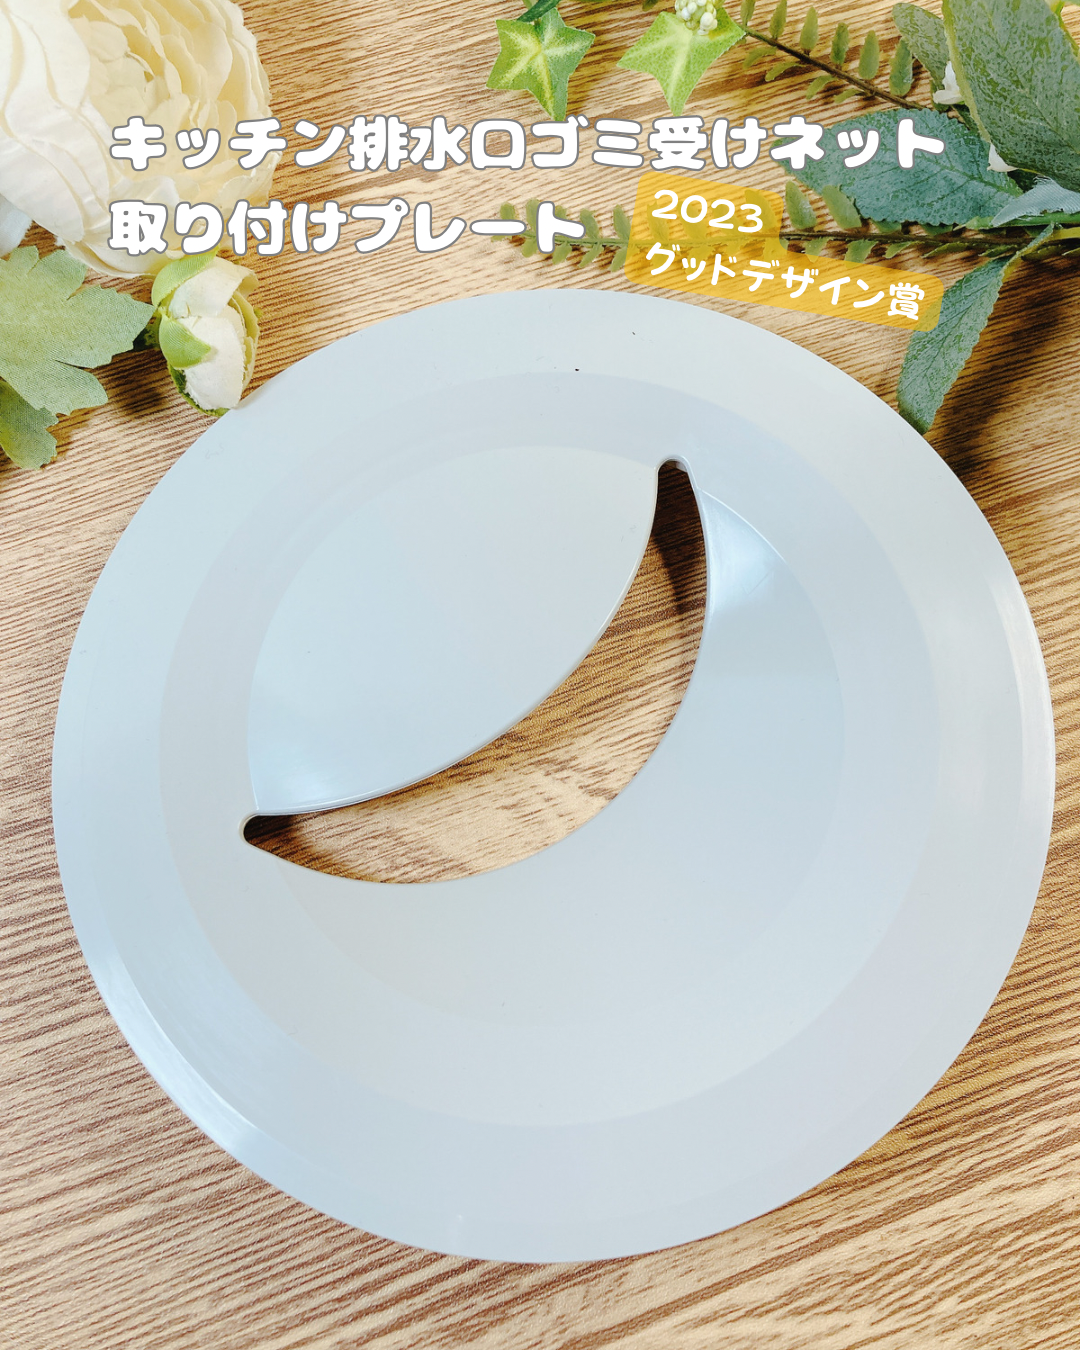 HAISUIKO キッチン排水口ゴミ受けネット取り付けプレート 防臭ふたセットの良い点・メリットに関する木戸咲夜さんの口コミ画像1